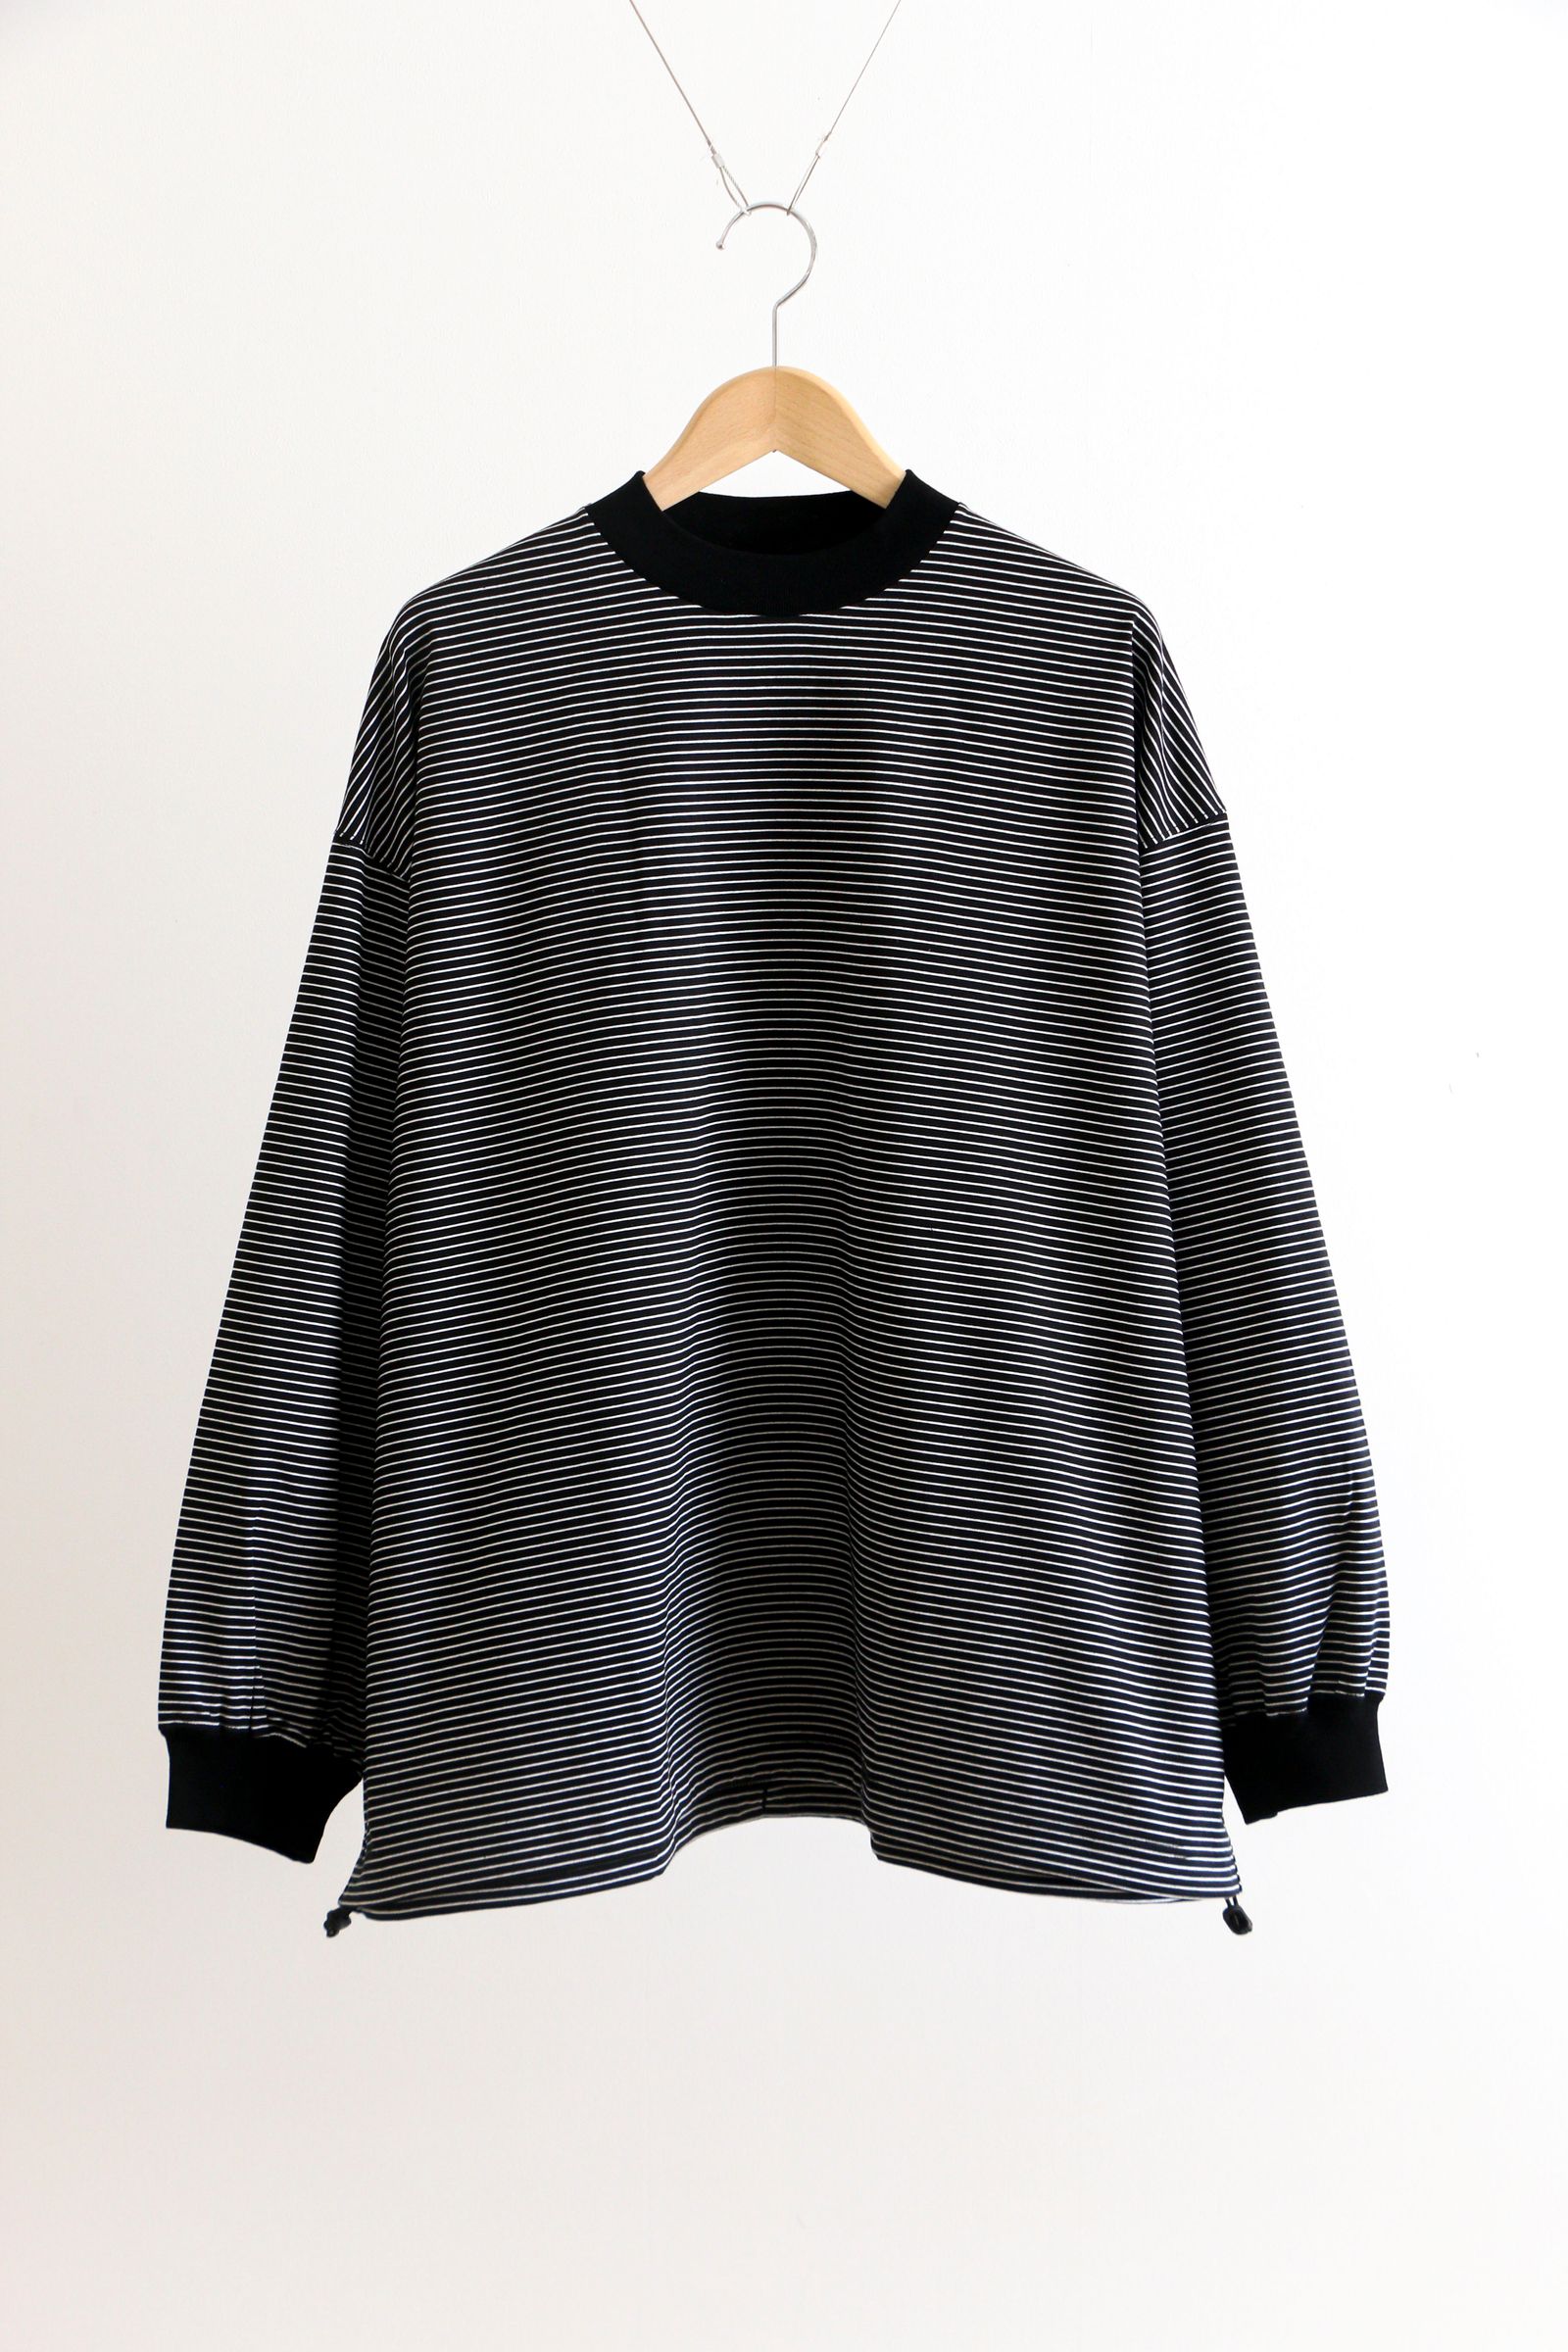 is-ness - BALLOON LONG T SHIRT BLACK x WHITE / バルーンTシャツ 